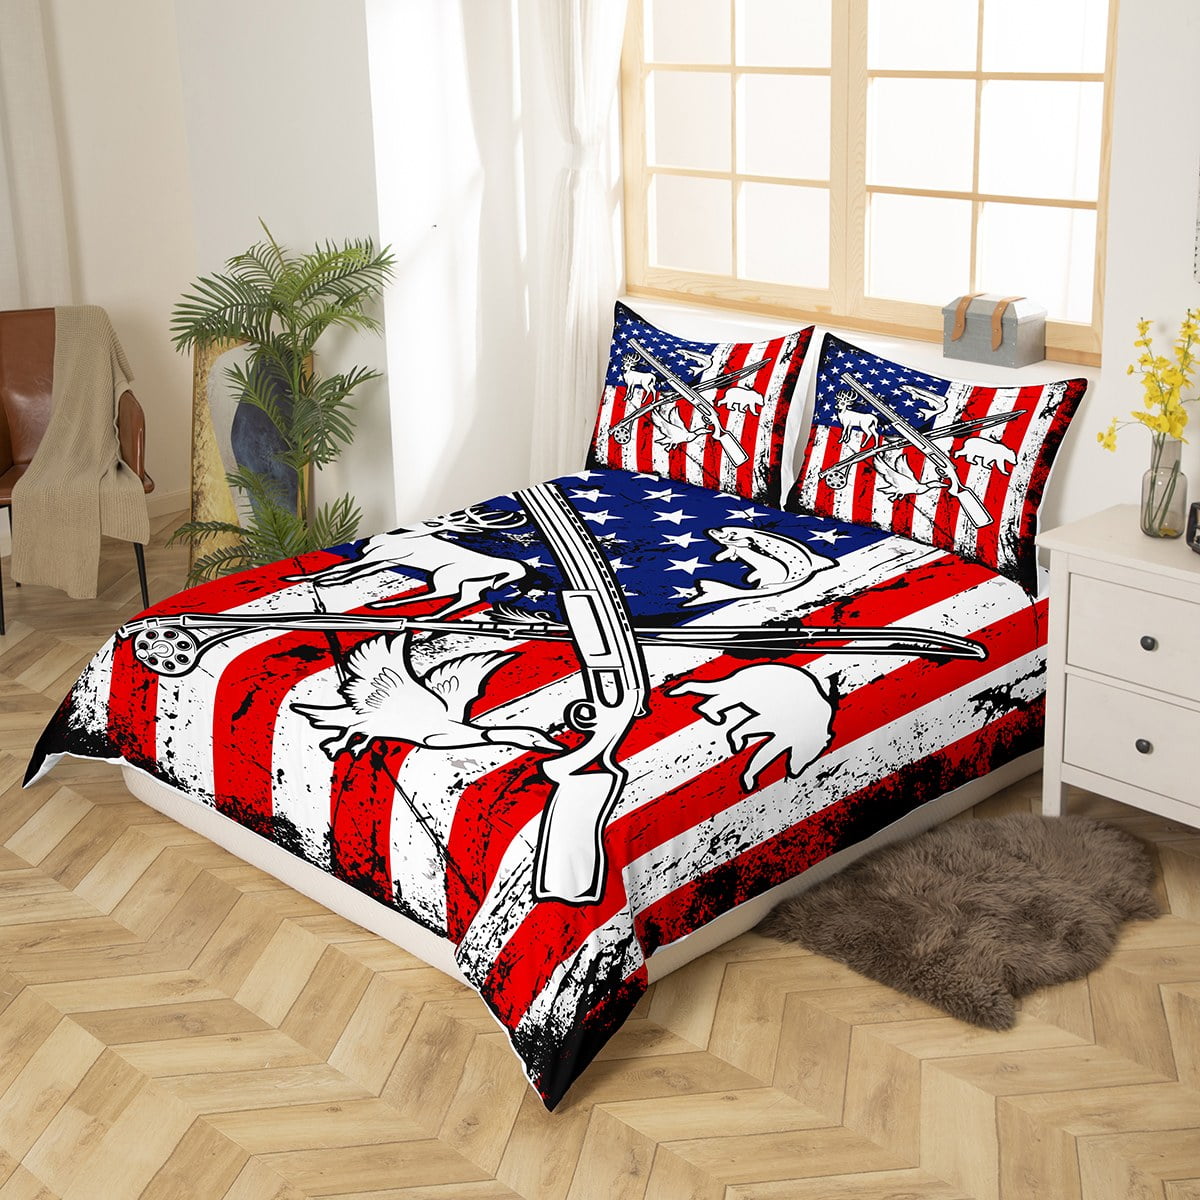  American Flag Comforter Set King for Boy Teens Bass